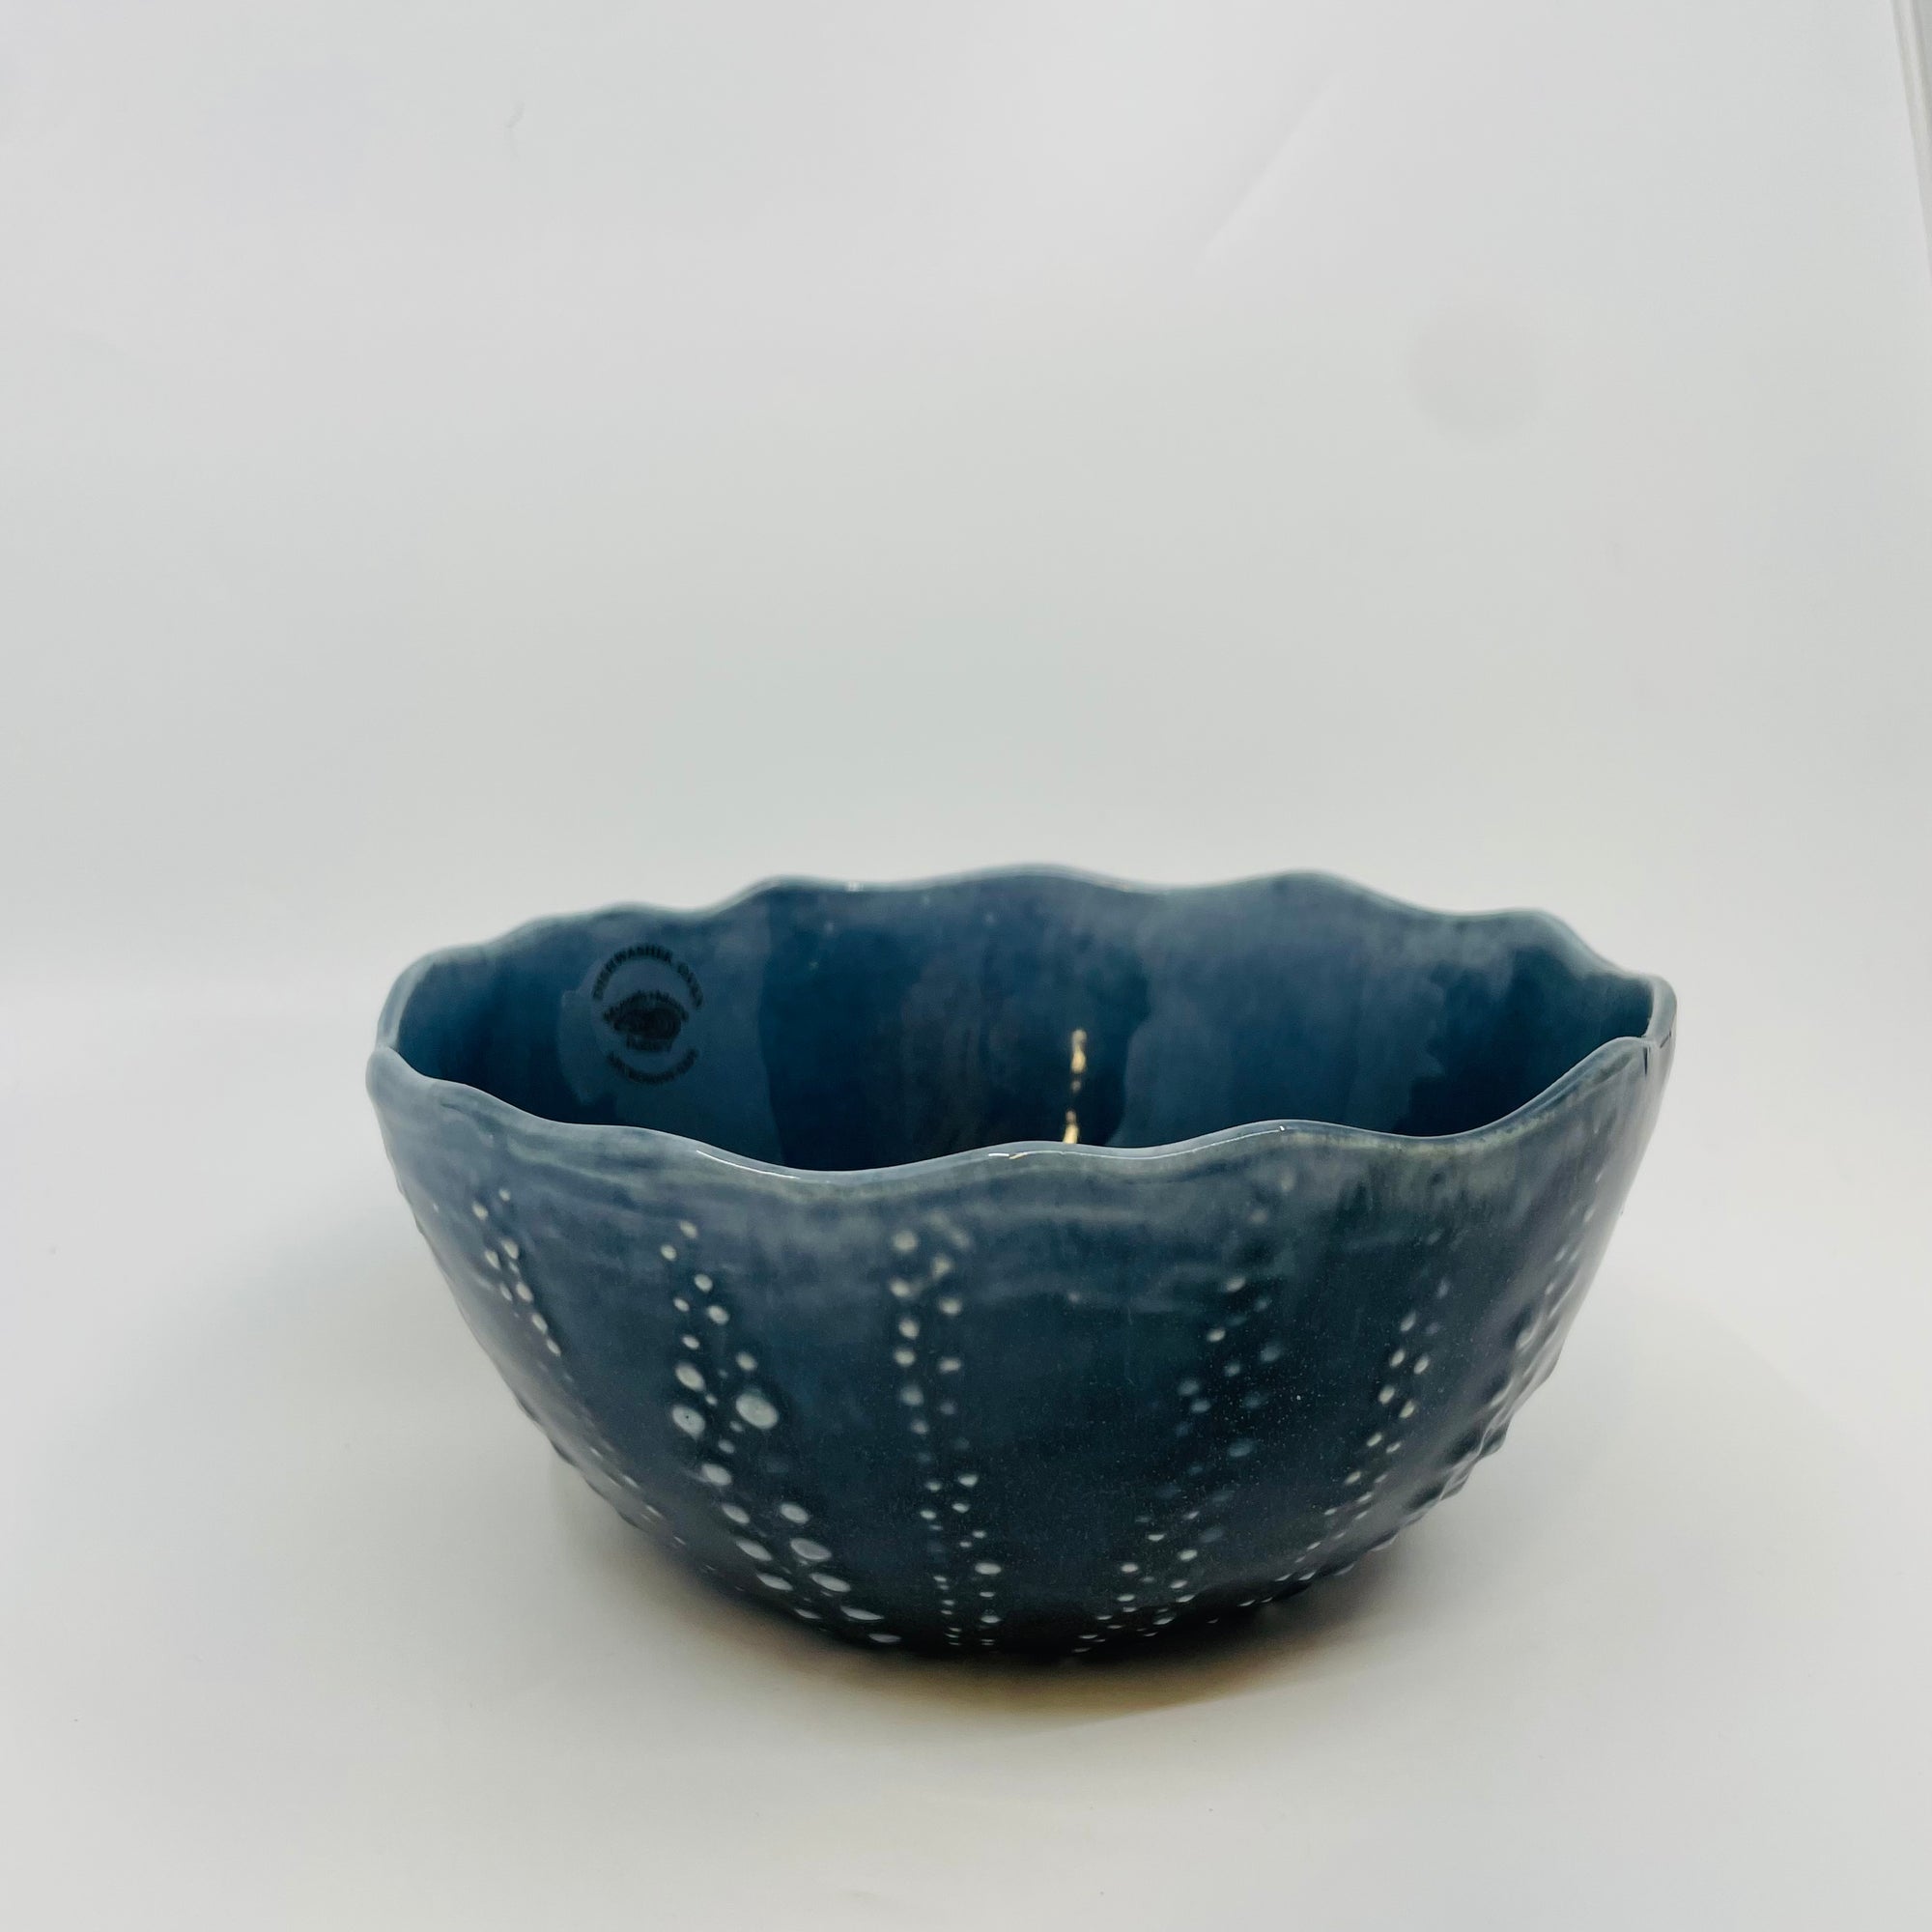 Urchin Bowl Blue - Medium - URCHIN-Med-B1 - House of Himwitsa Native Art Gallery and Gifts